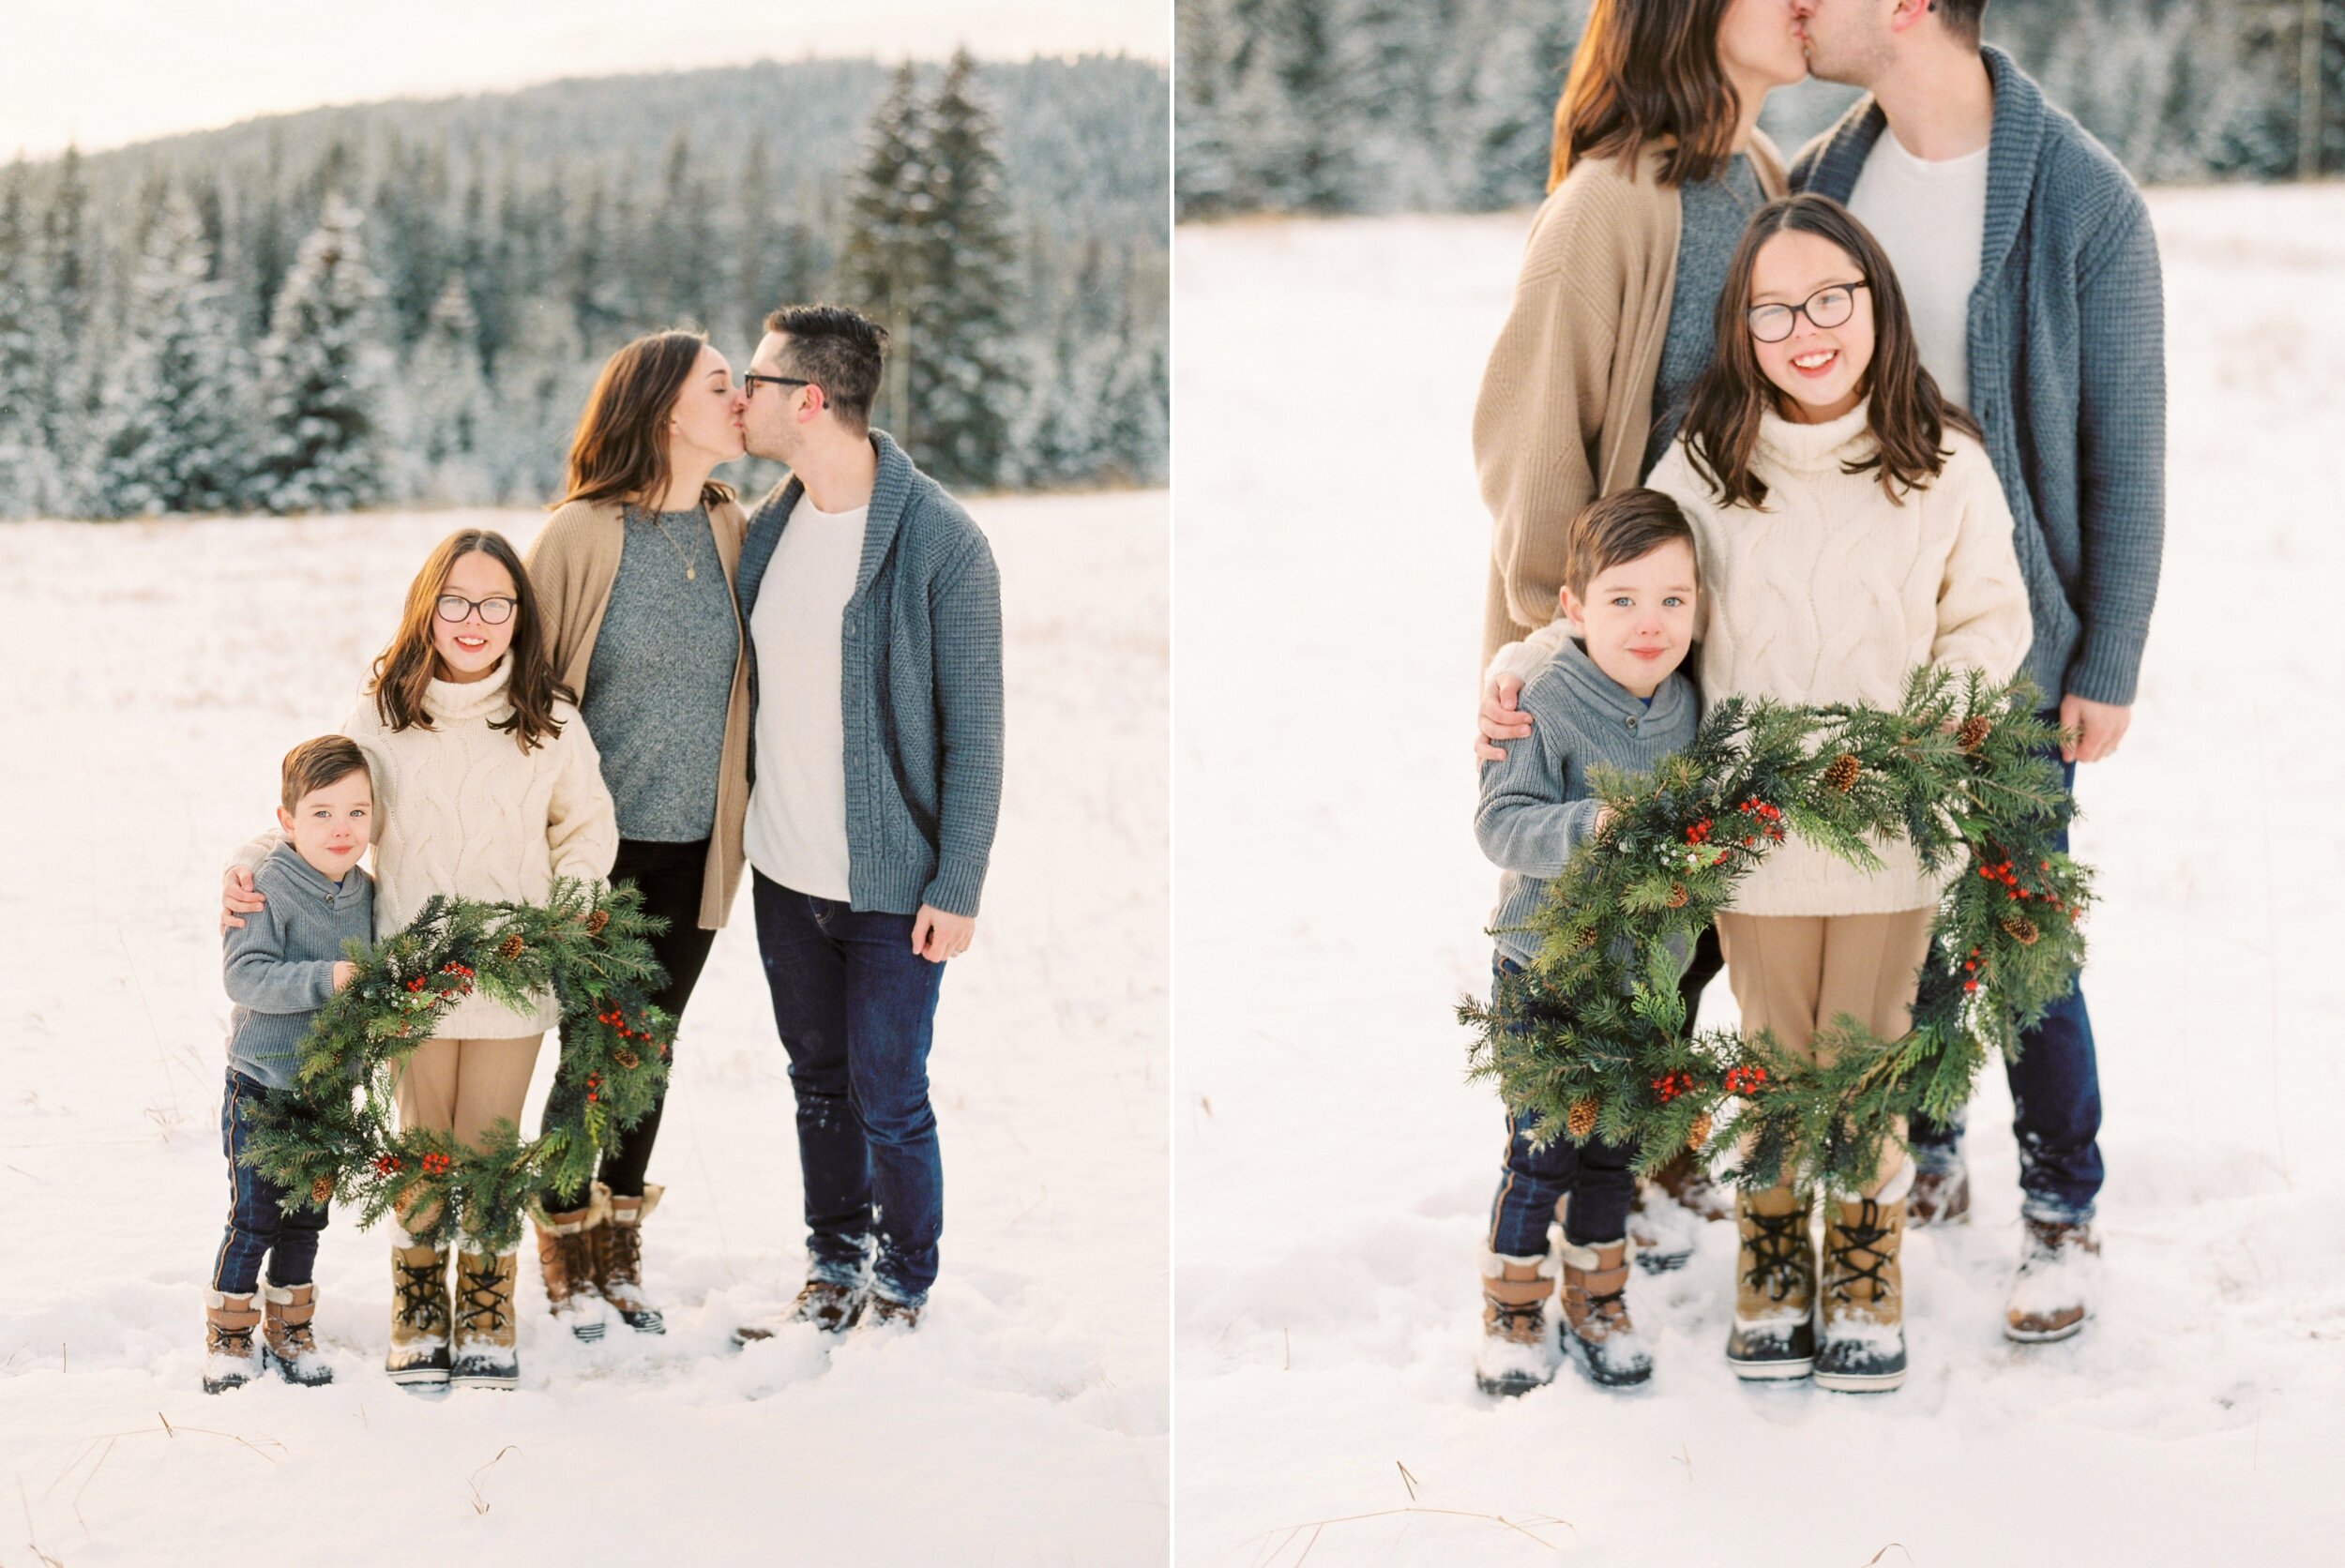  Winter family portraits | fine art film photographer Justine Milton Photography 